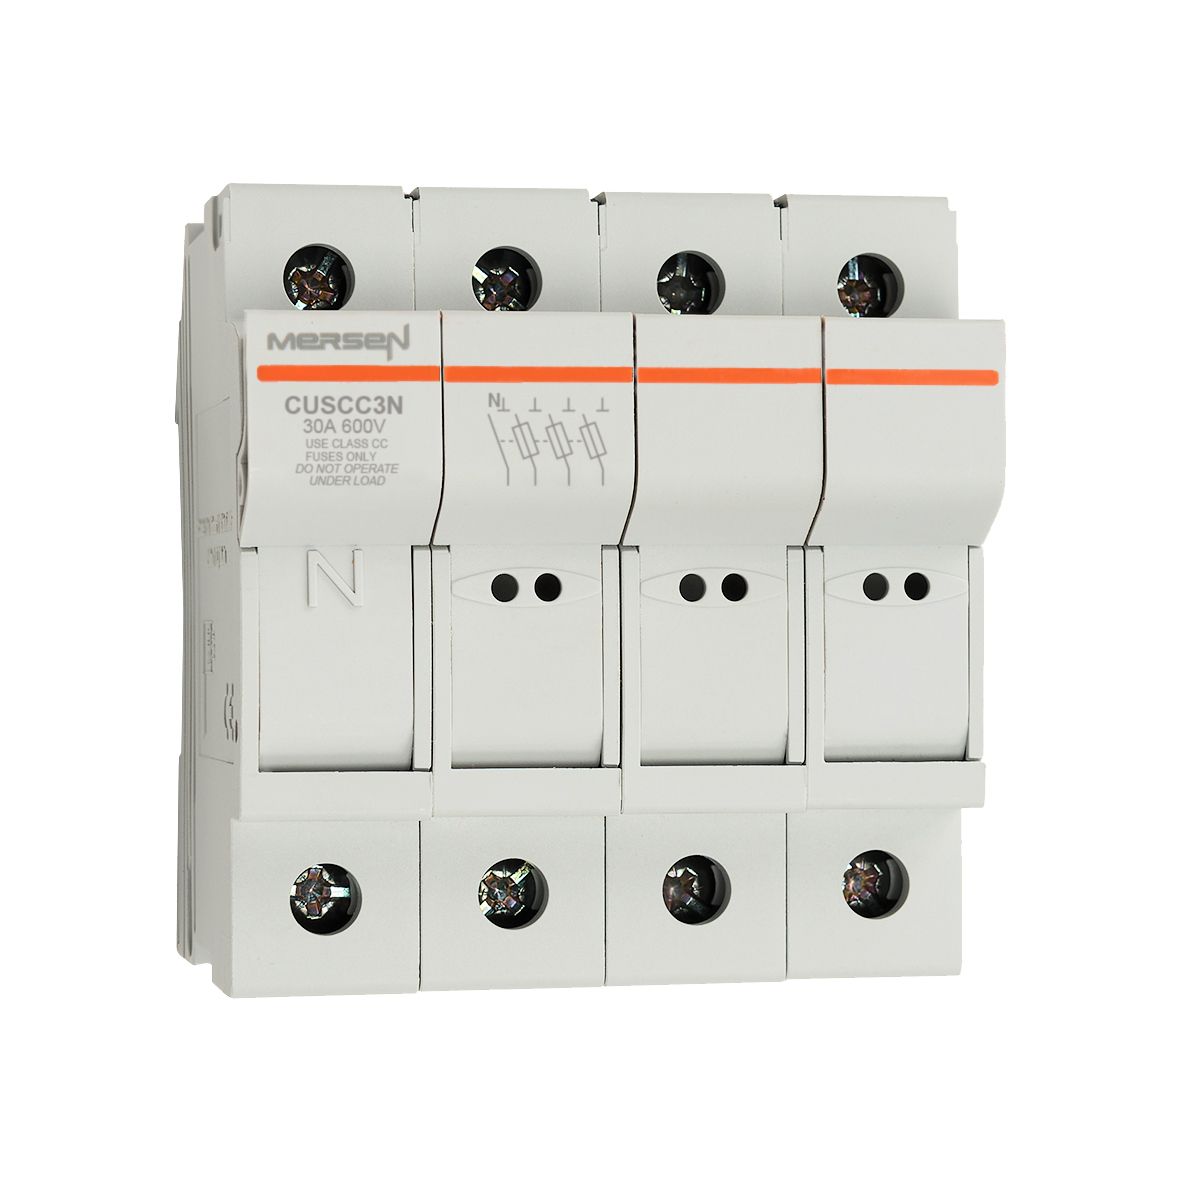 C1062786 - modular fuse holder, UL, 3P+N, Class CC, DIN rail mounting, IP20